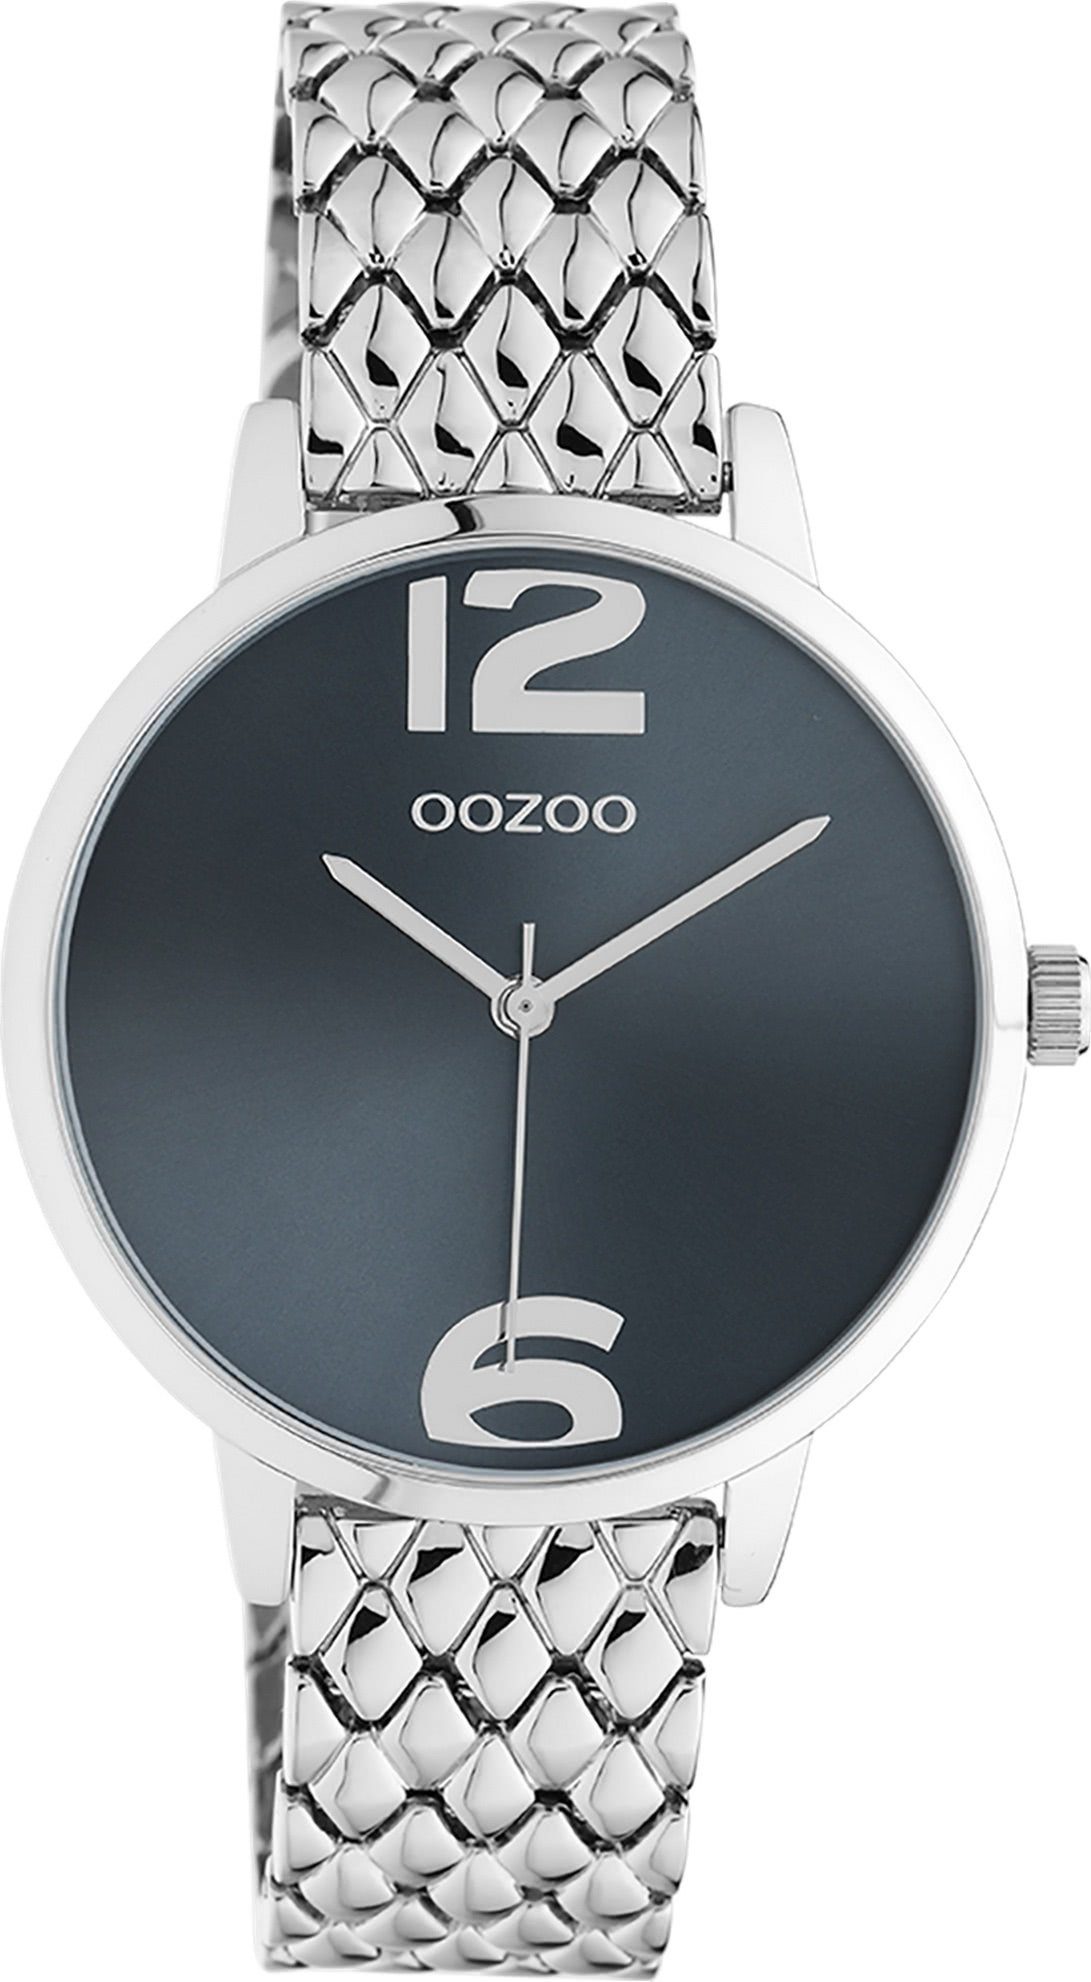 OOZOO Quarzuhr Oozoo Unisex Armbanduhr silber Analog, Damen, Herrenuhr rund, (ca. 38mm) Edelstahlarmband, Elegant-Style